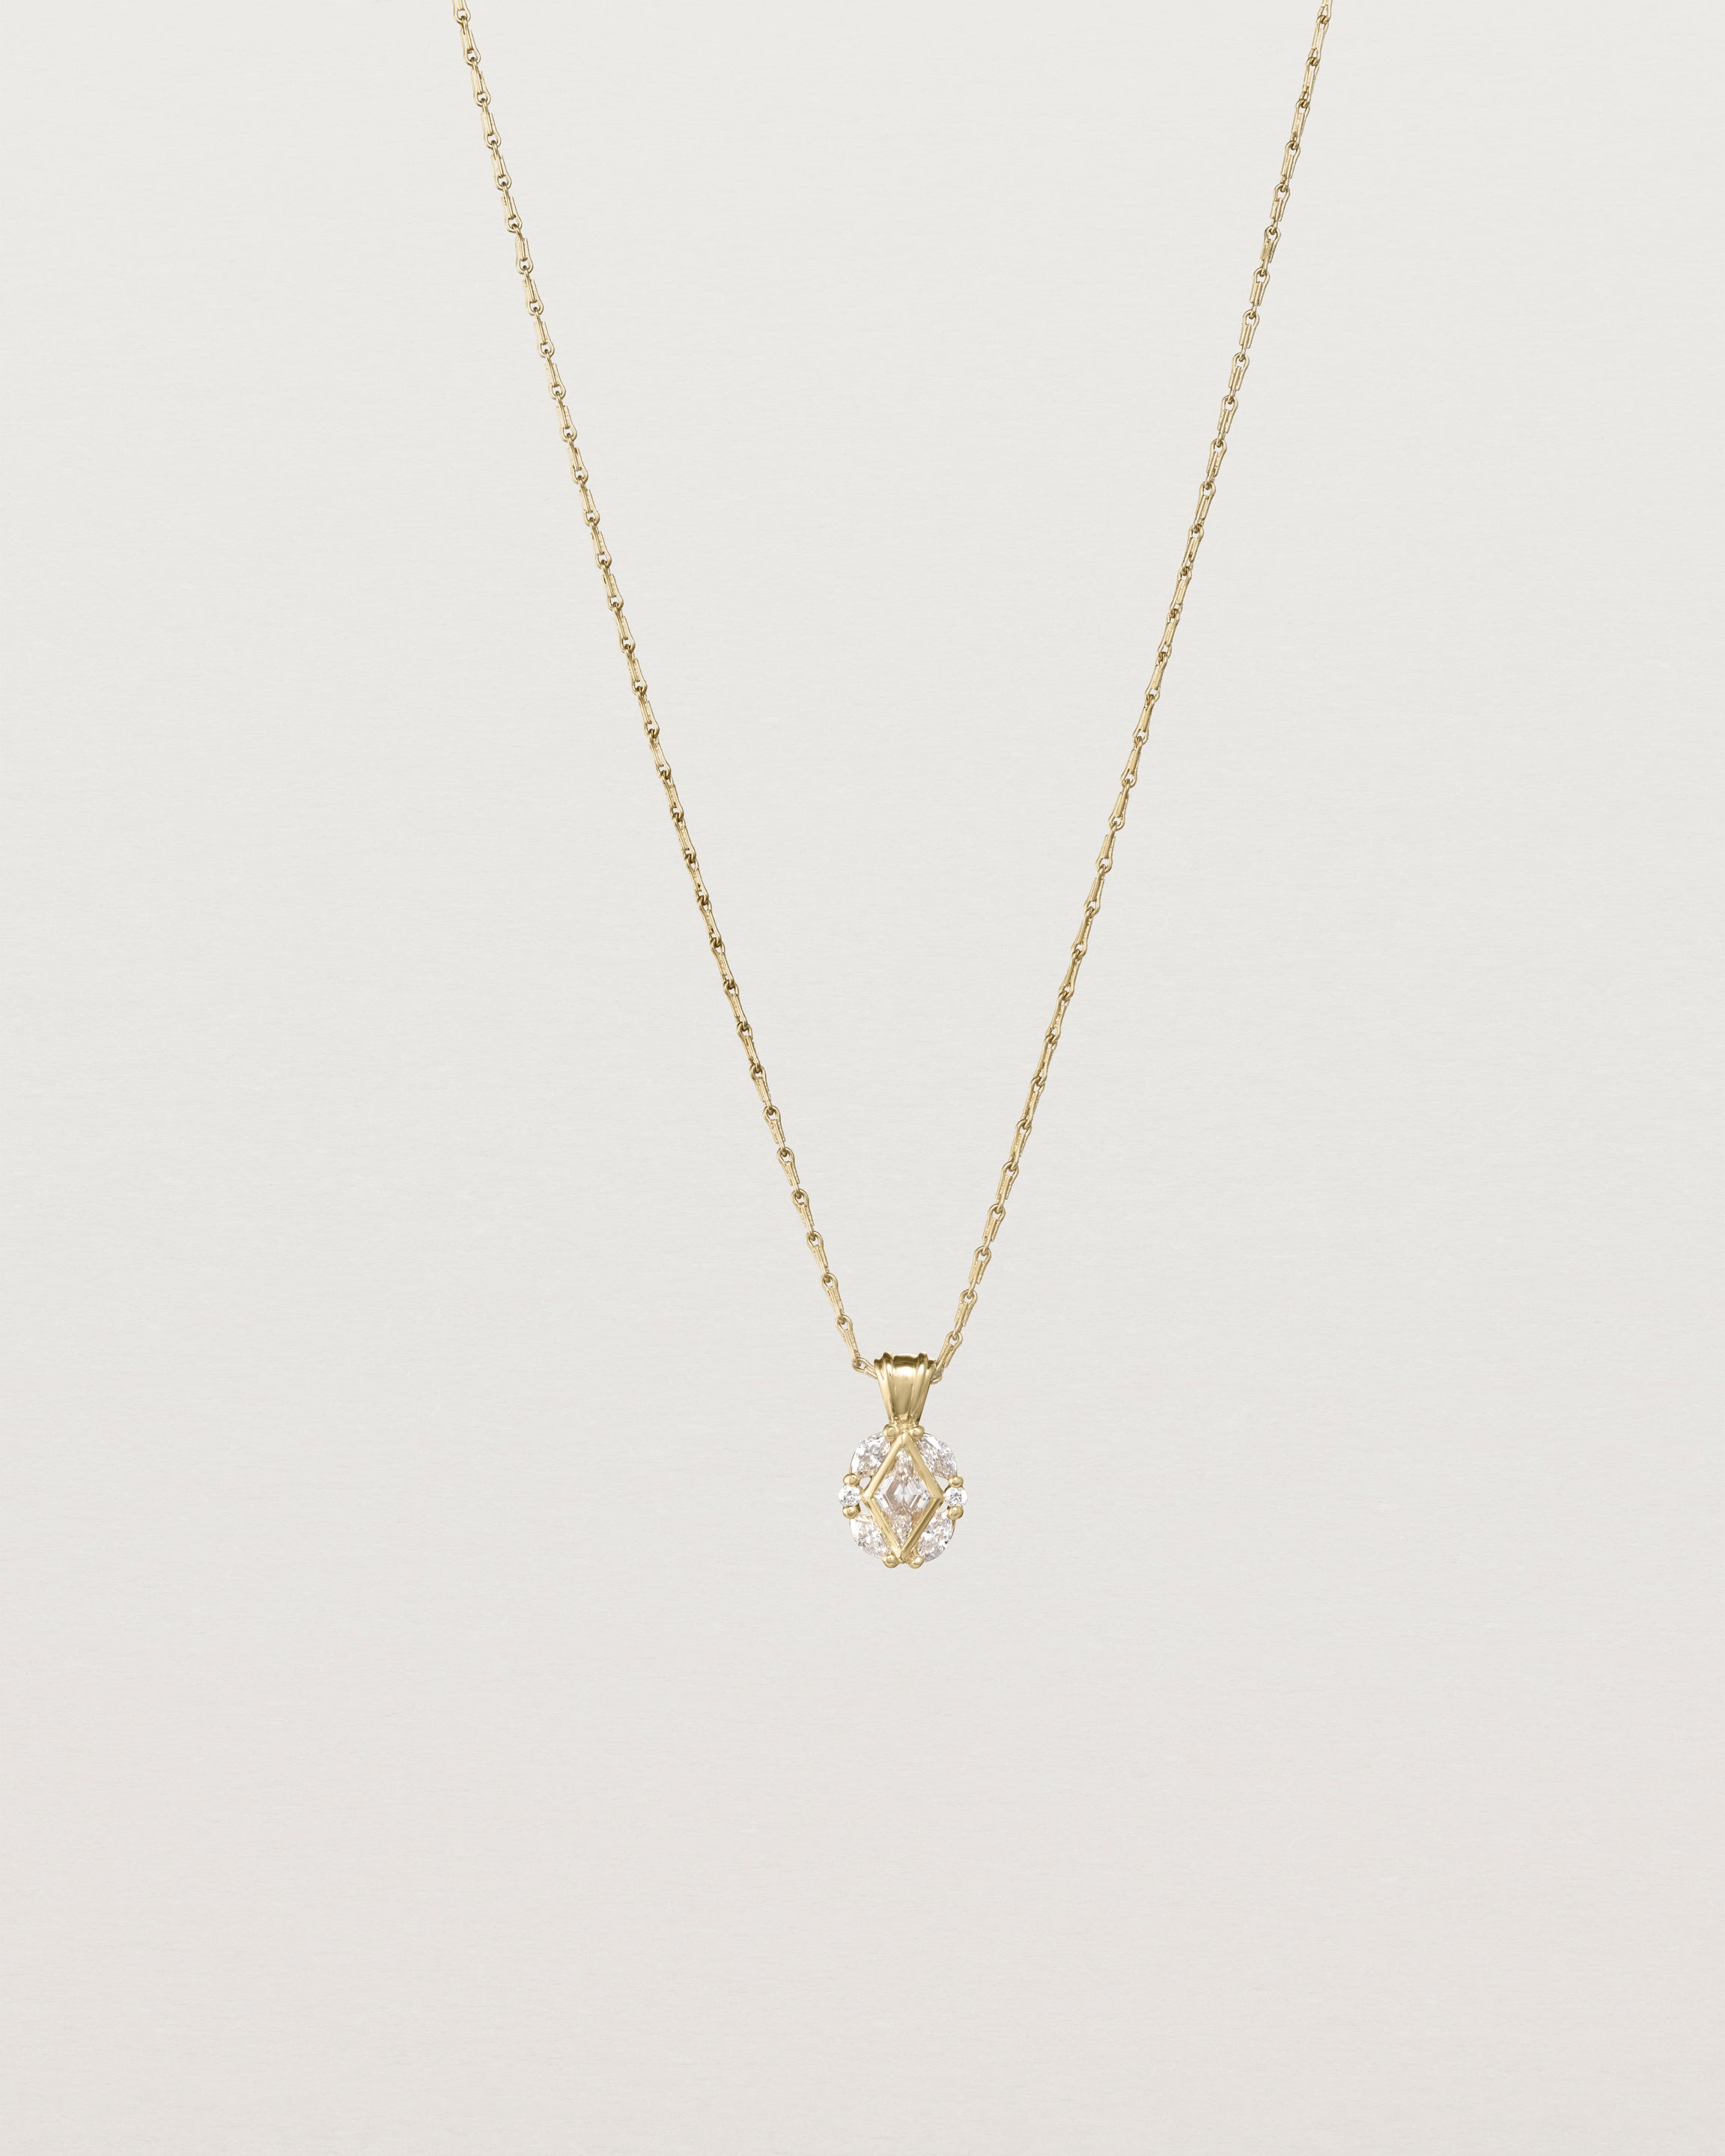 Mavis Necklace | Vintage Inspired